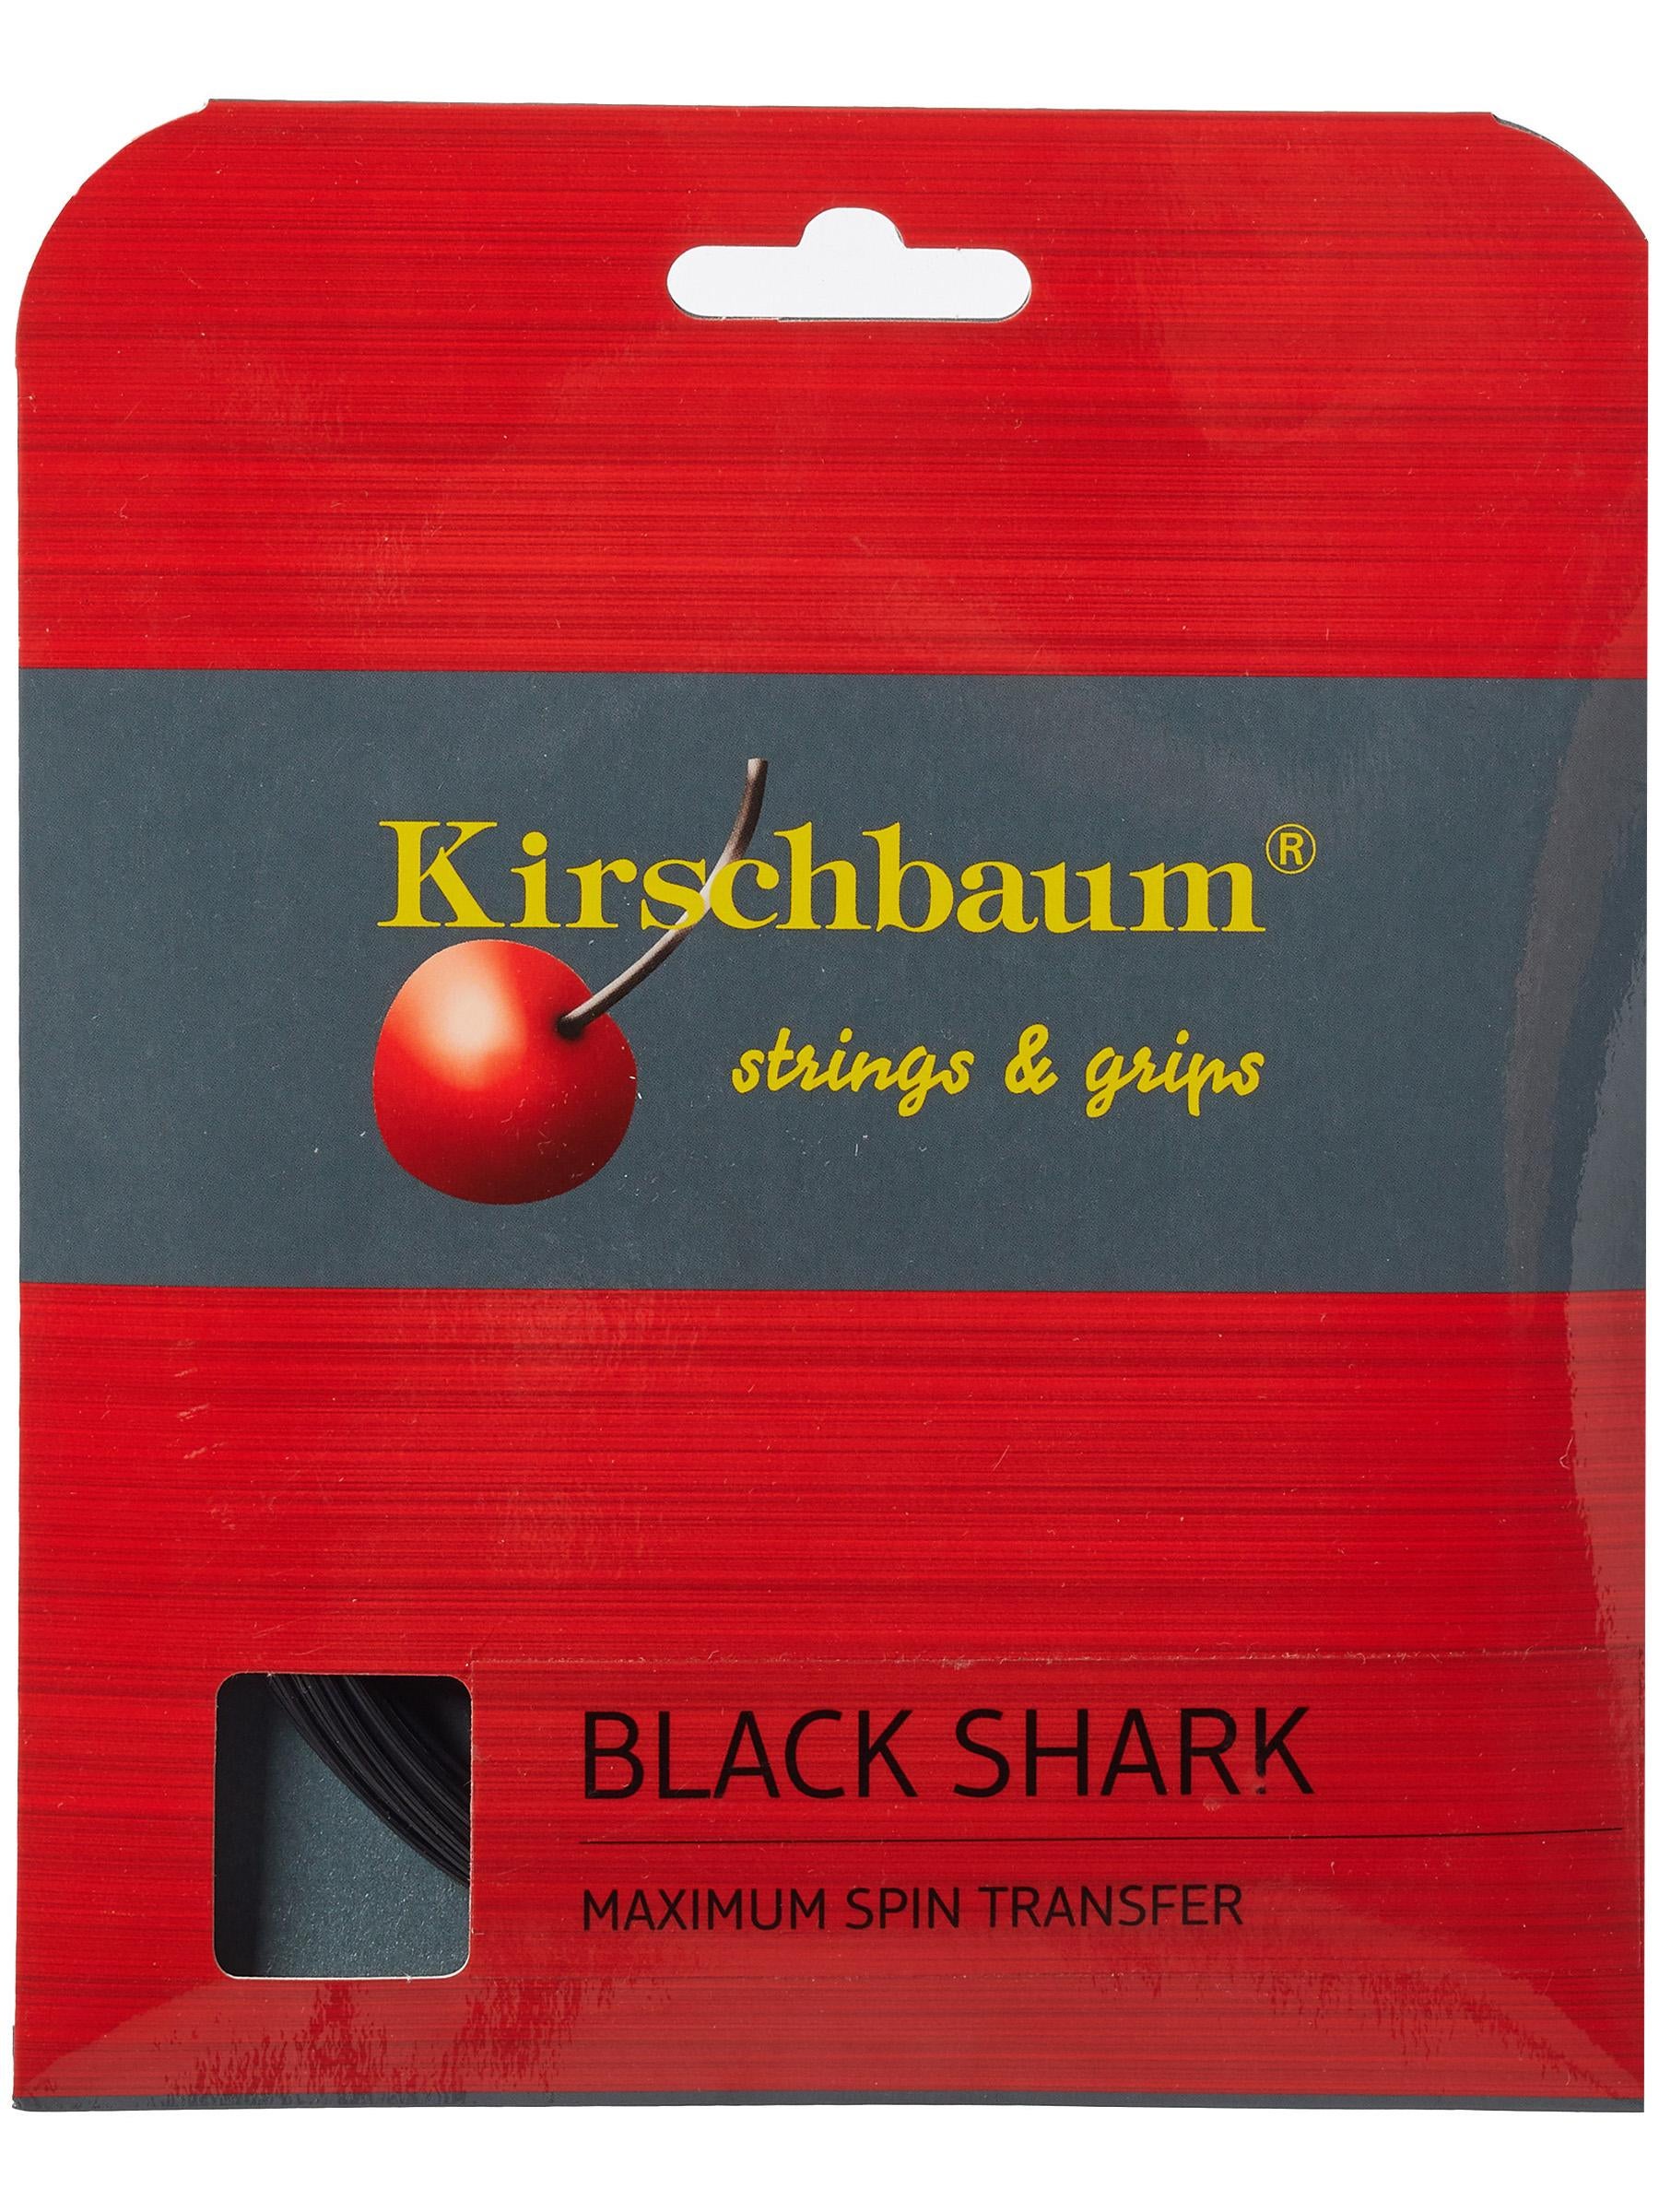 Kirschbaum Black Shark Tennis String Set 